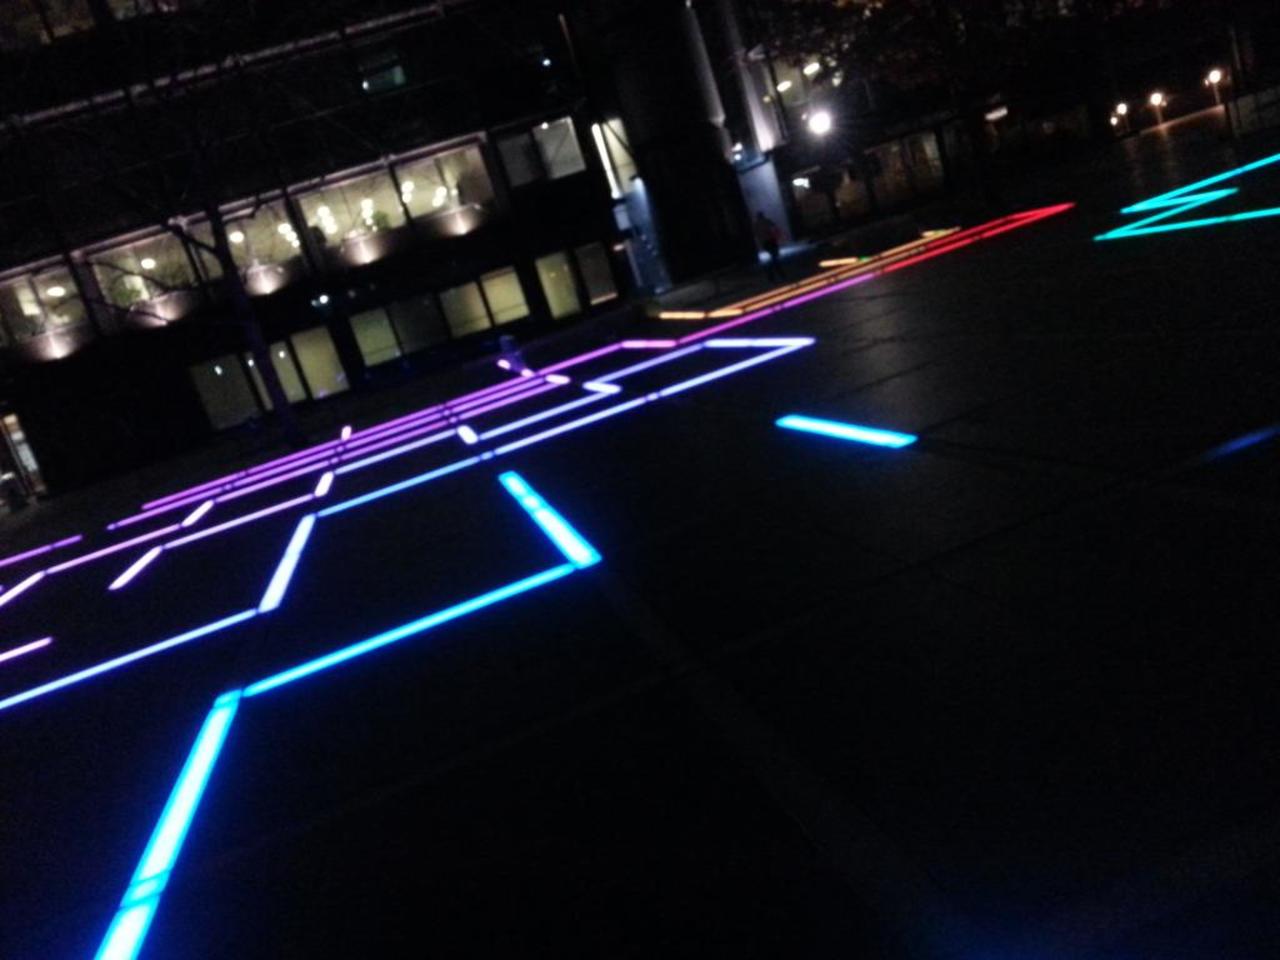 Amazing light installation in #Broadgate. #London still surprises. #art # installation #digital http://t.co/EiymZDbW3m